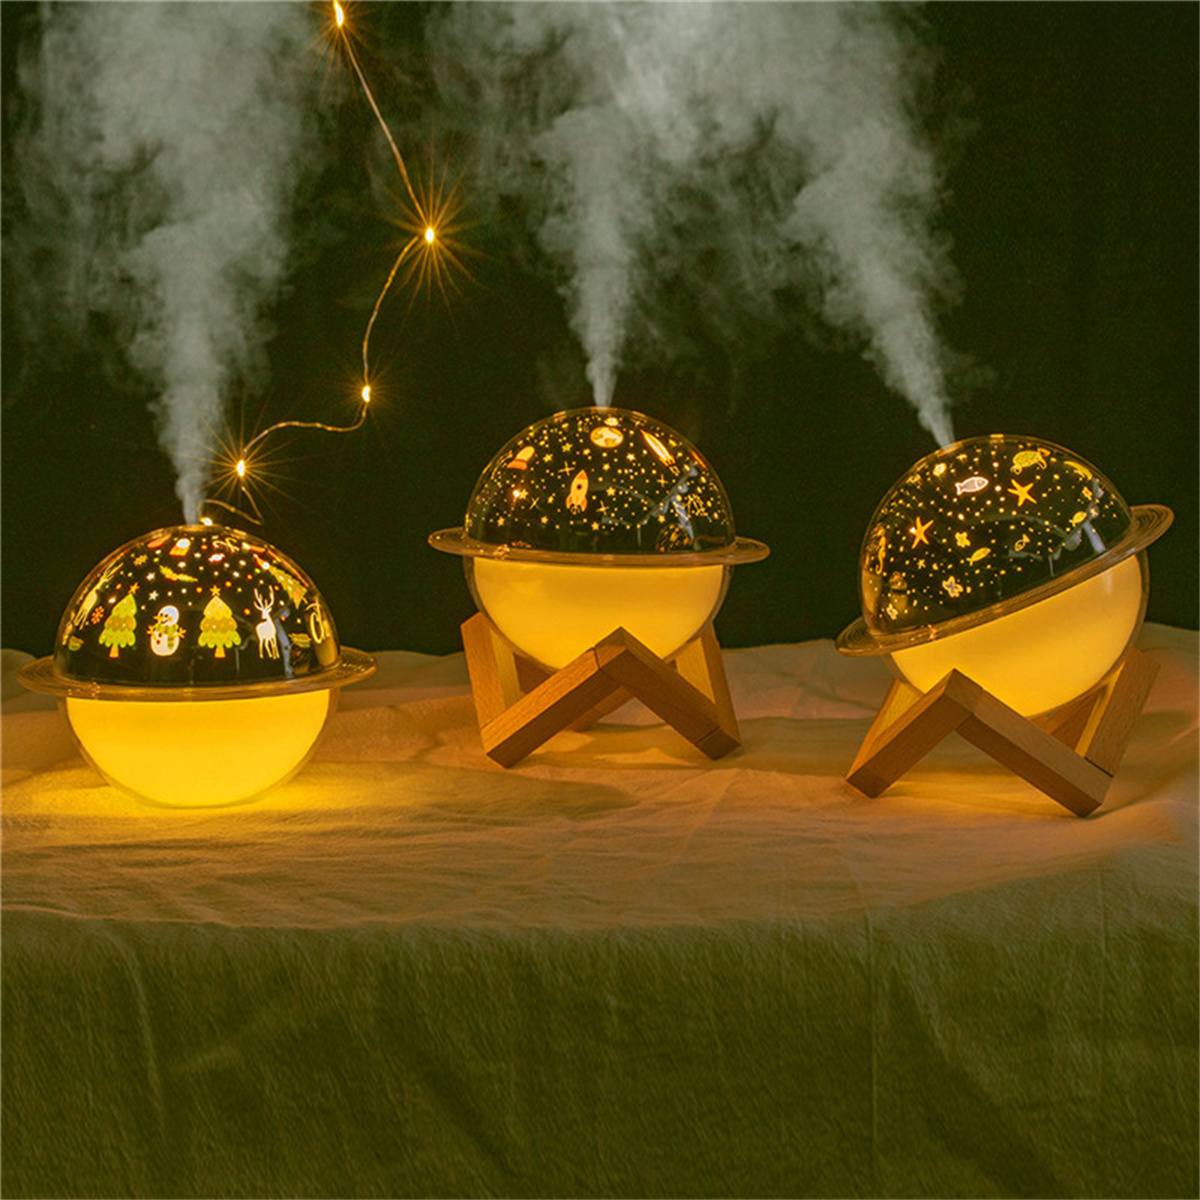 10 SYNTEK Projektionslicht Luftbefeuchter Luftbefeuchter (Raumgröße: schwarz m²) Luftbefeuchter Luftbefeuchter Sternmodell LED Luftbefeuchtung